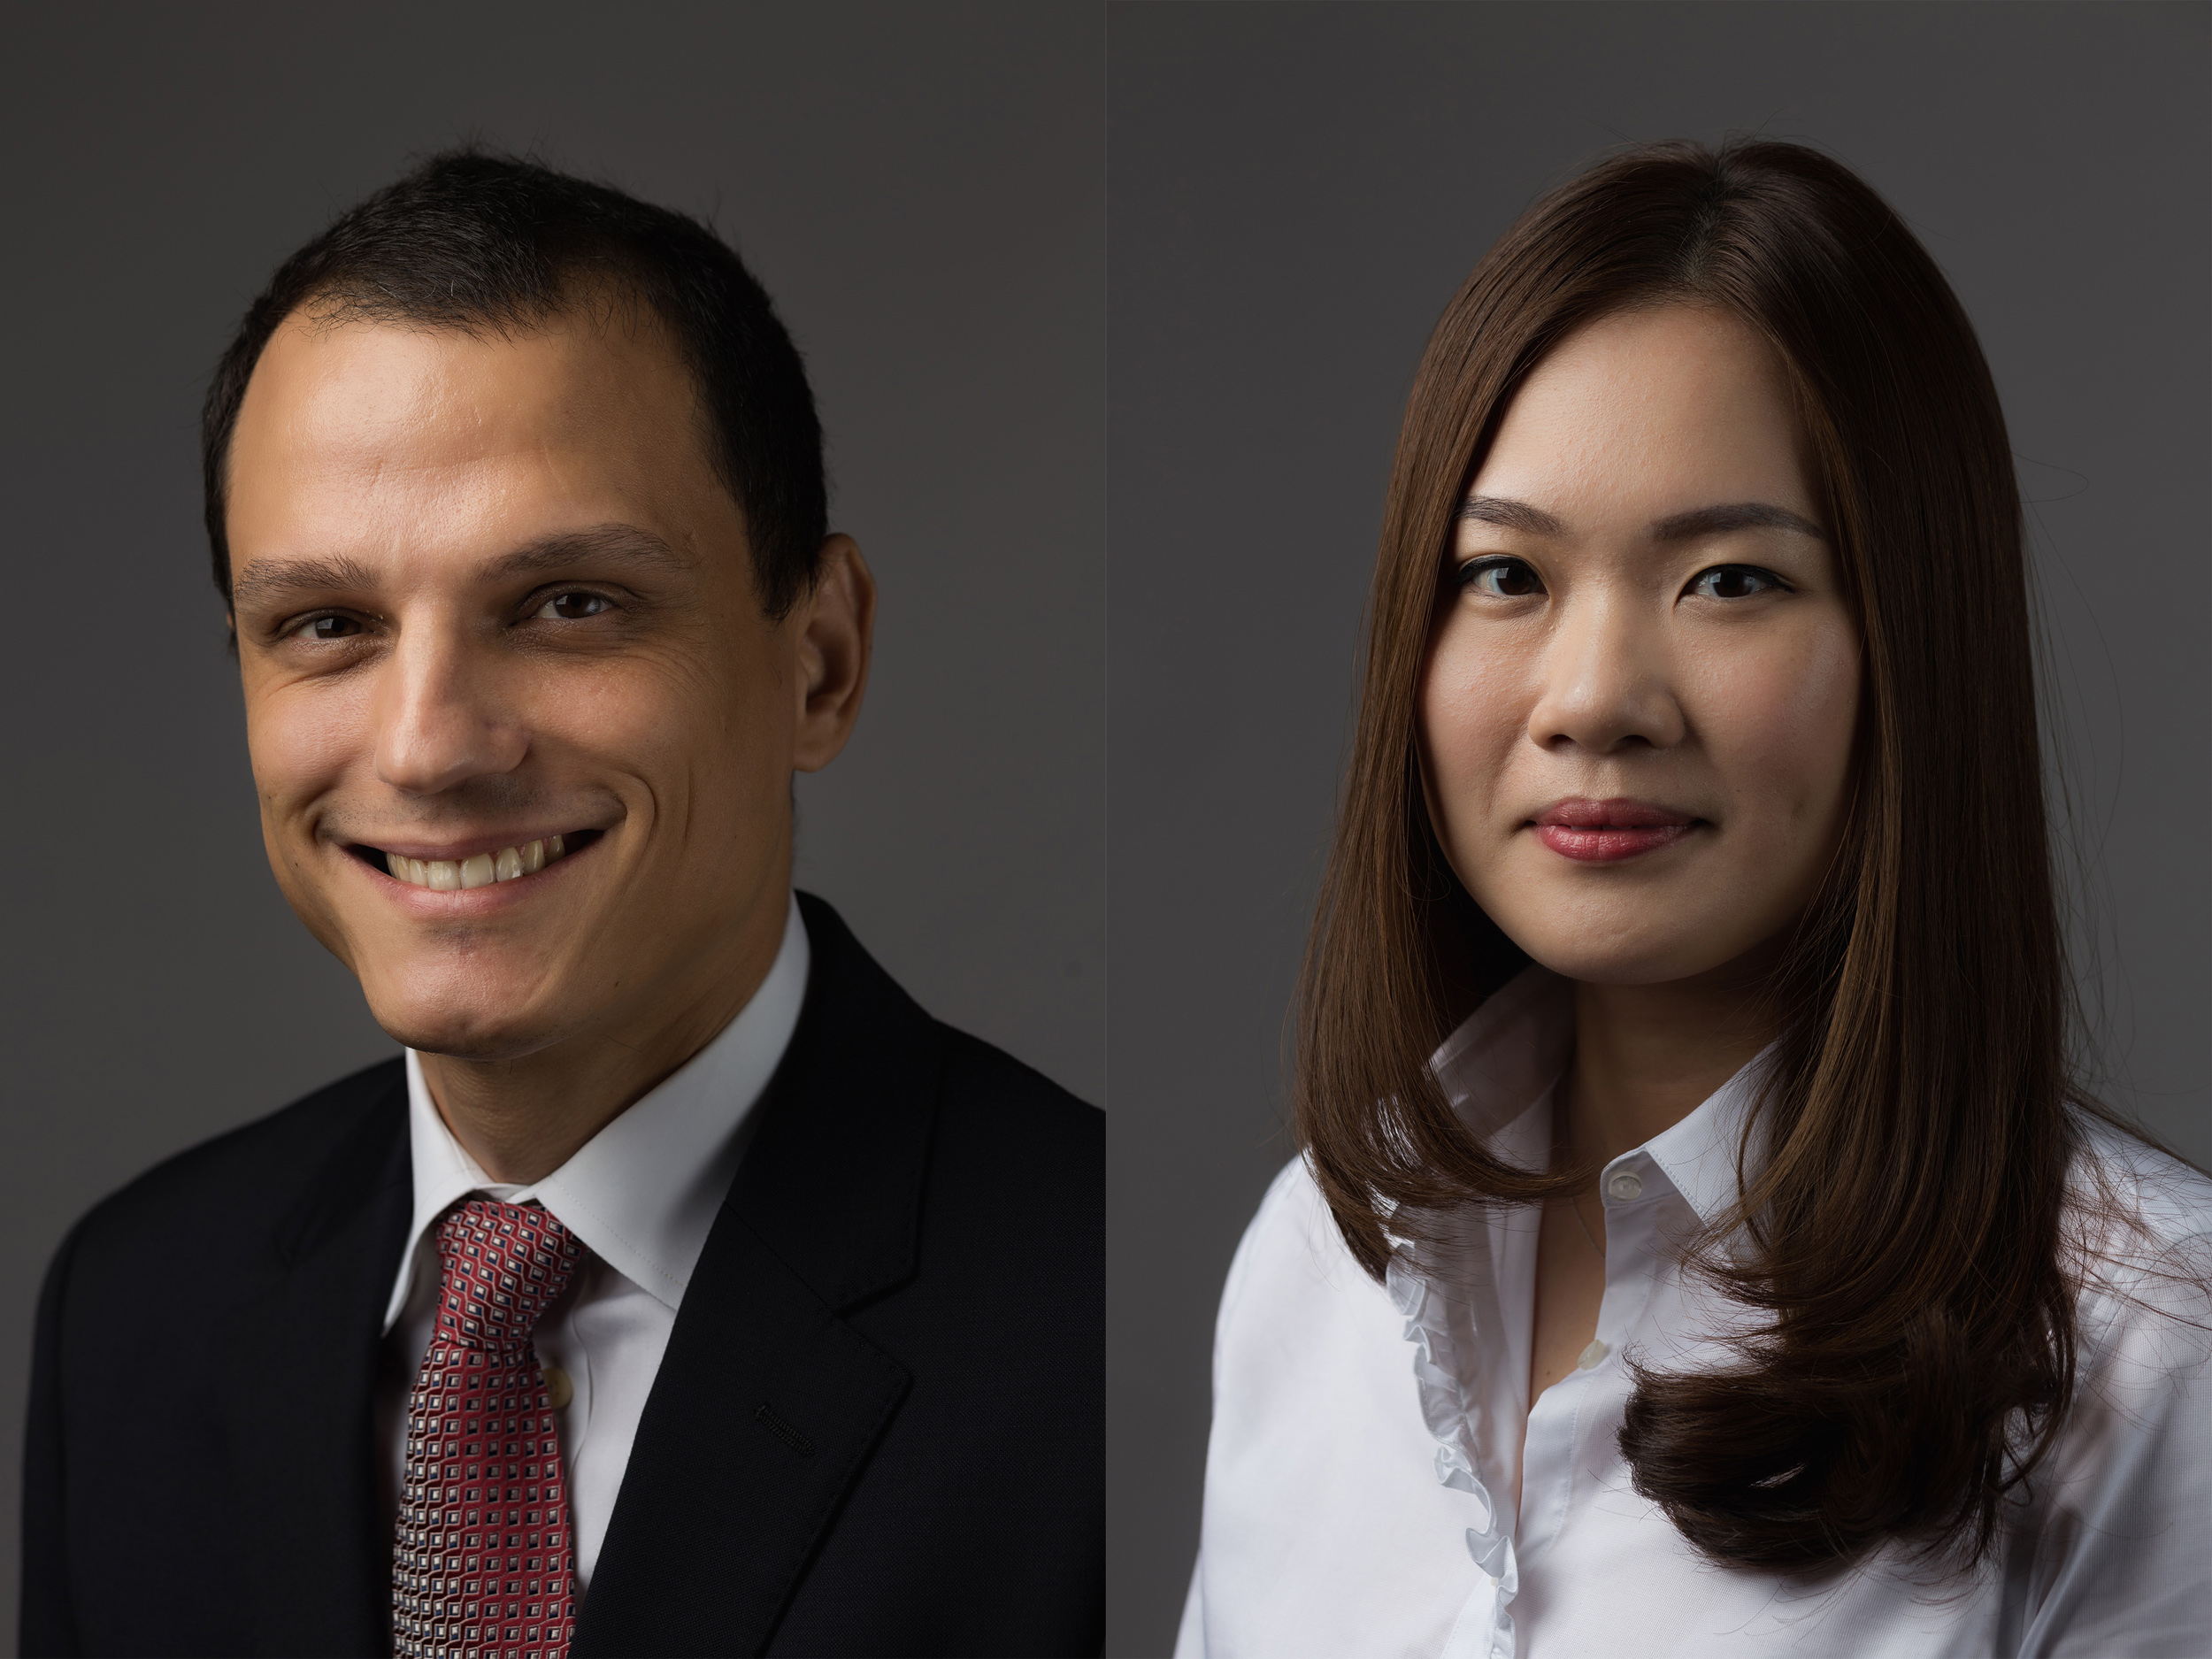 Corporate Portrait Photographer Singapore - Moody's Investor Service